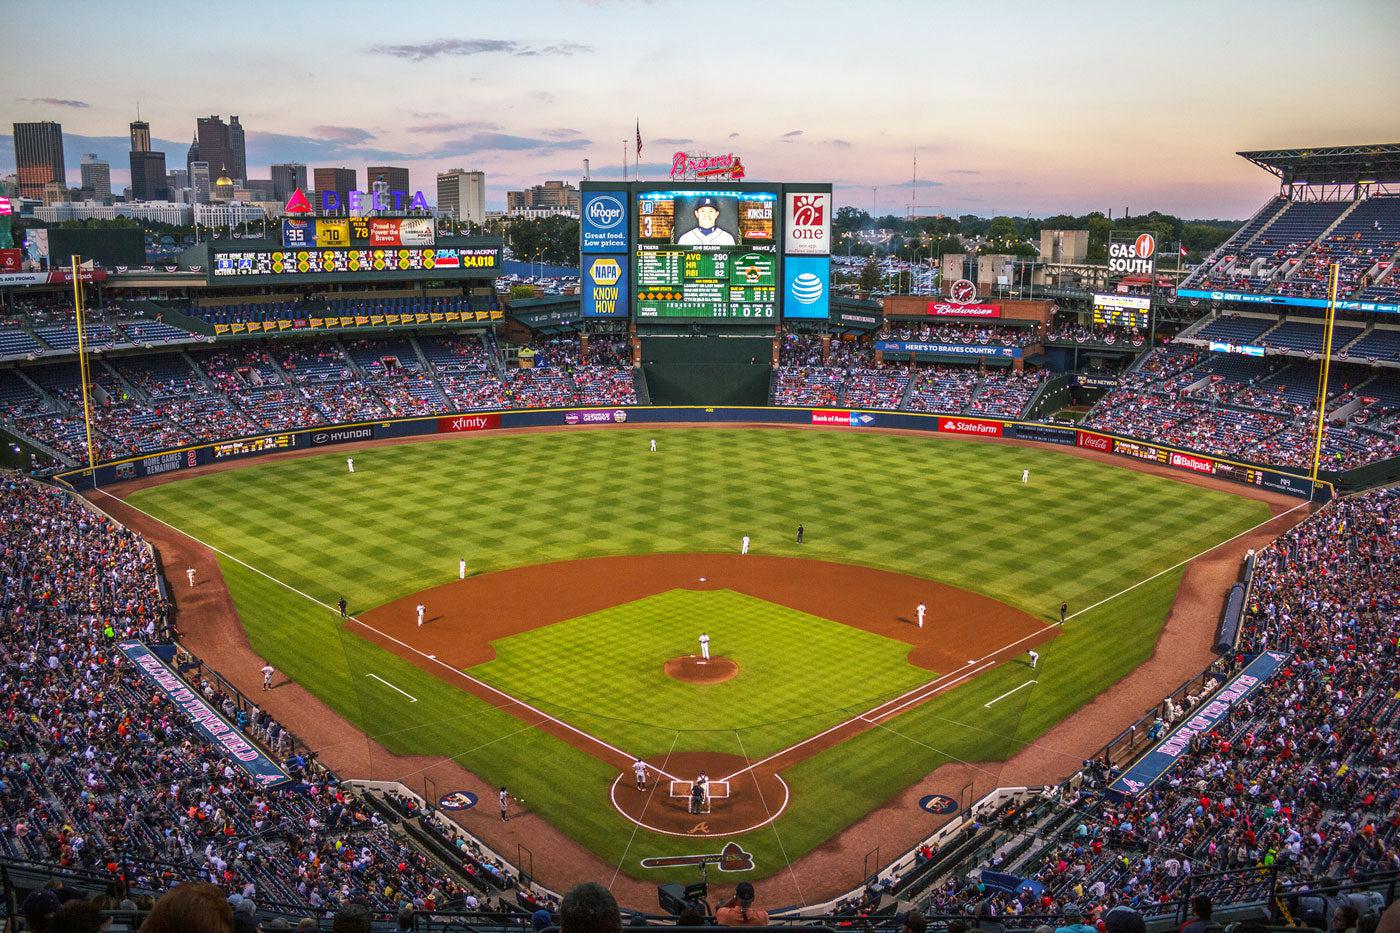 8 x 32 MLB Atlanta Braves 3D Stadium Banner